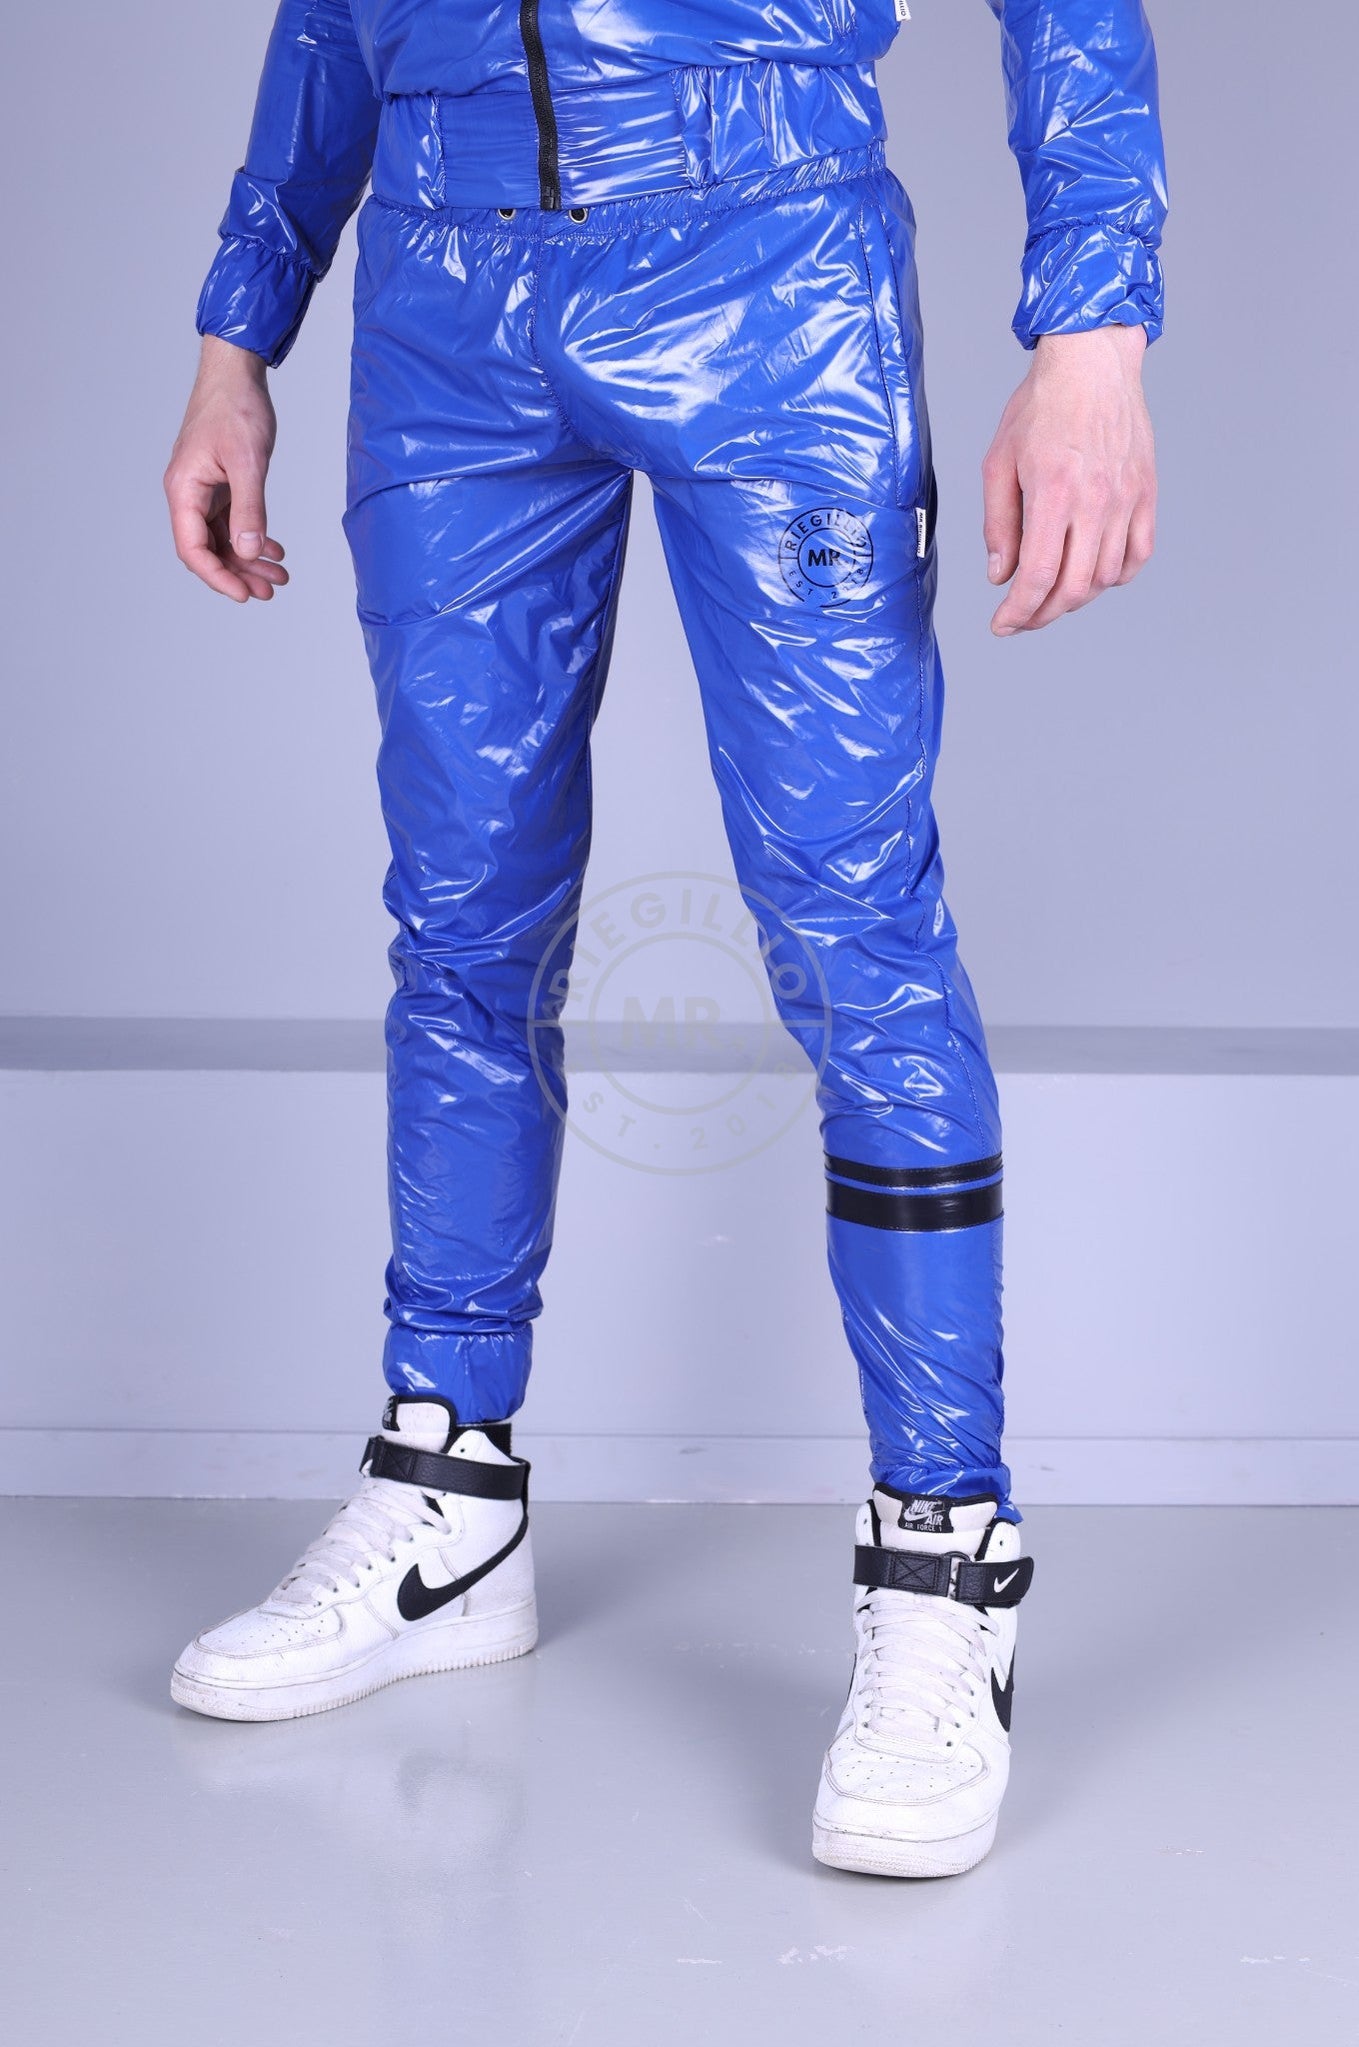 Shiny Nylon Tracksuit Pants - Blue by MR. Riegillio